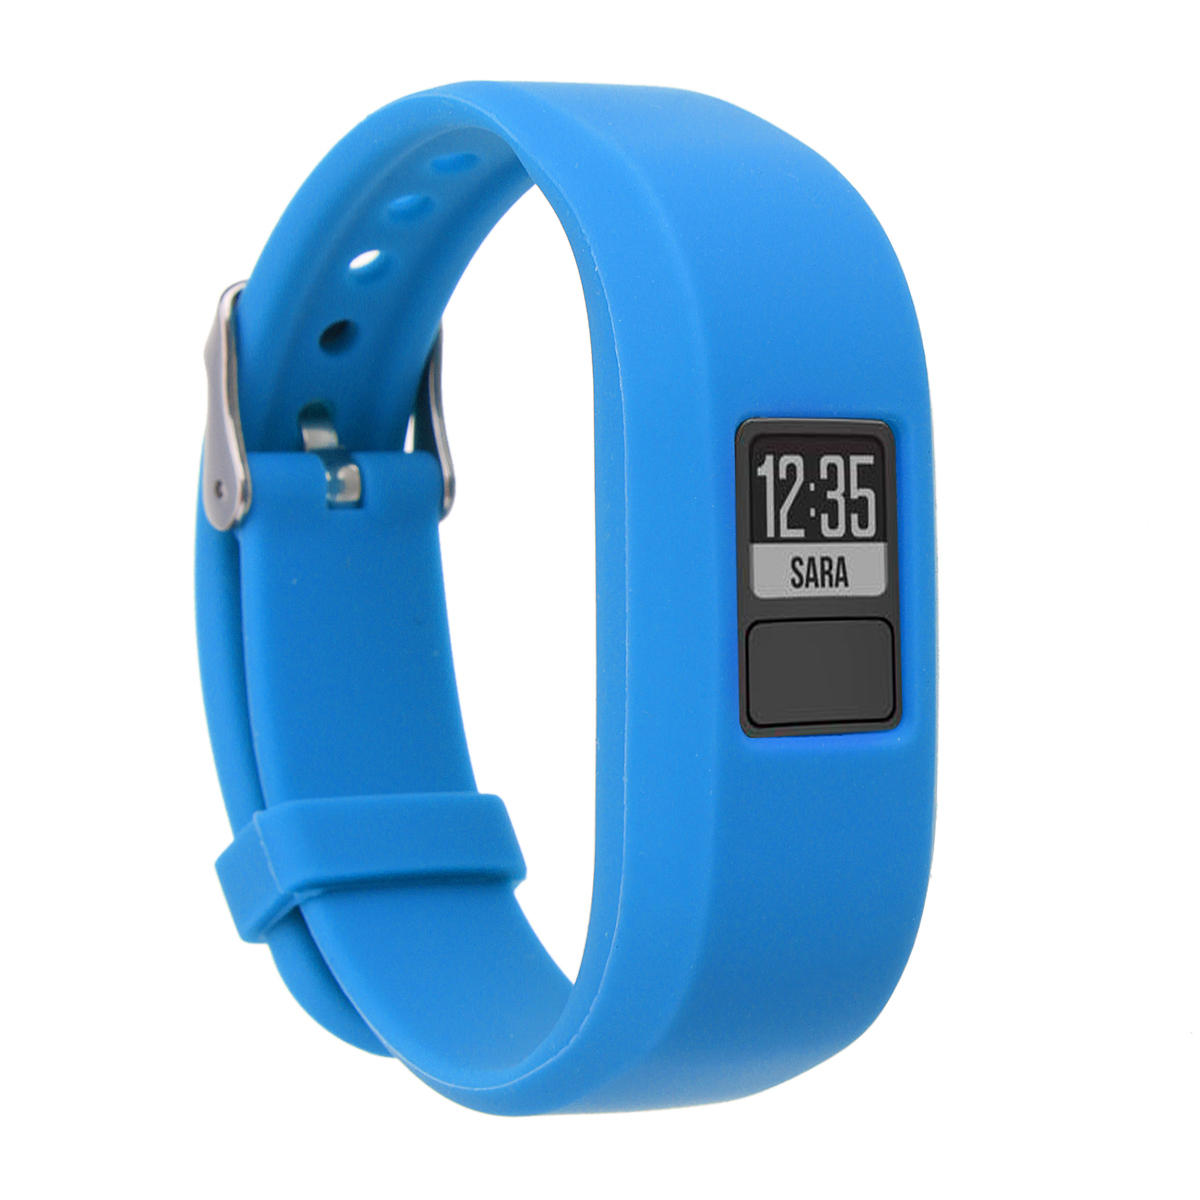 Sports Silicone Watch Band Replacement Wrist Strap For Garmin Vivofit JR Tracker Bracelet